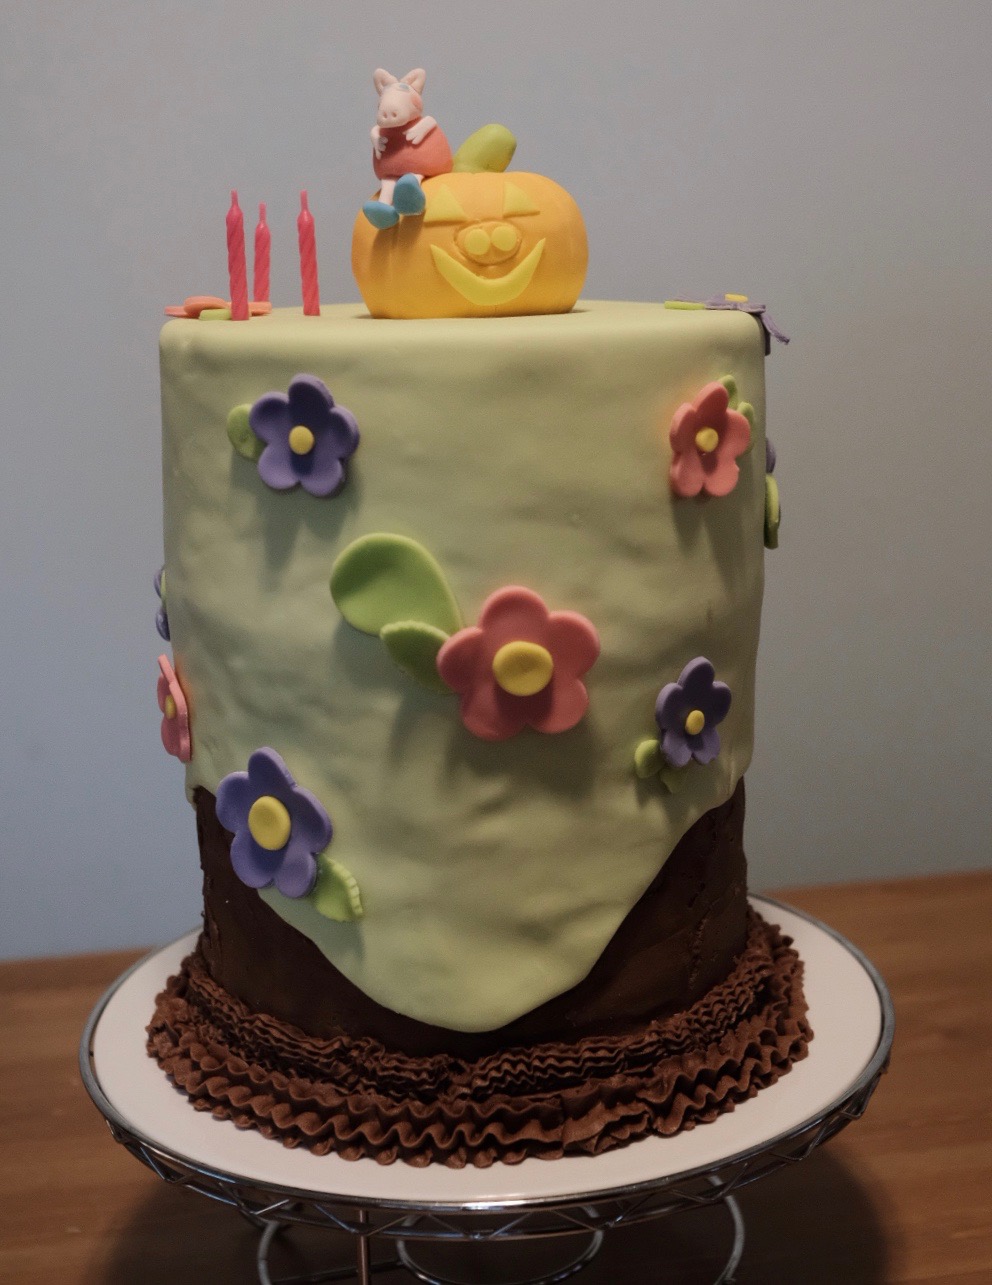 A Peppa Pig birthday cake